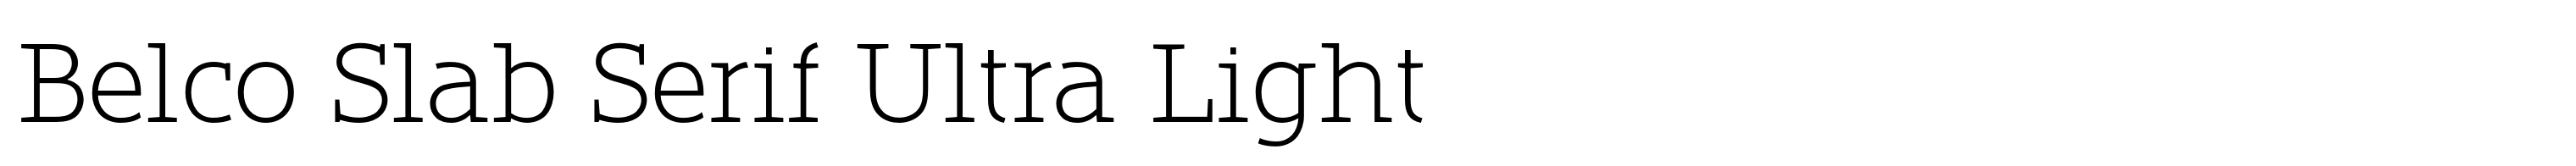 Belco Slab Serif Ultra Light